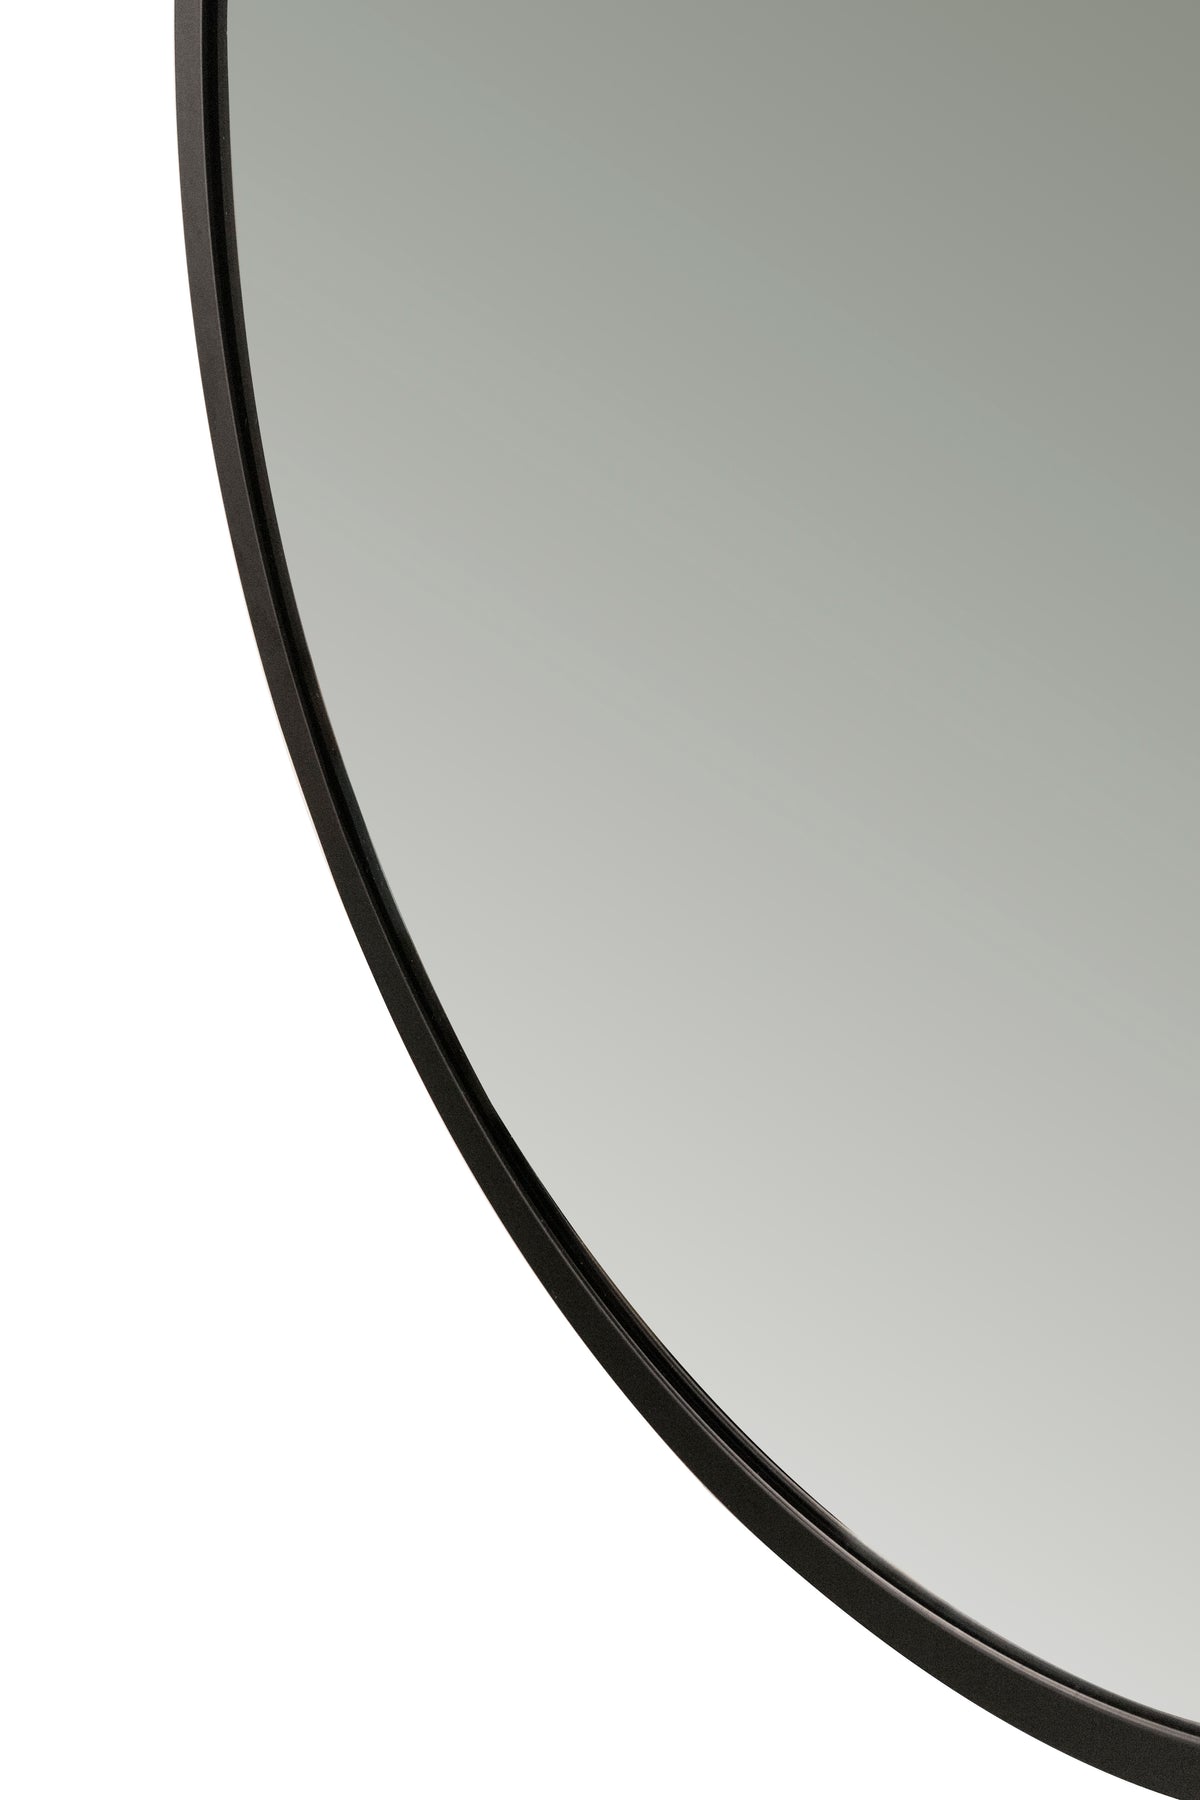 Oslo Round Black Leather Mirror - 600mm